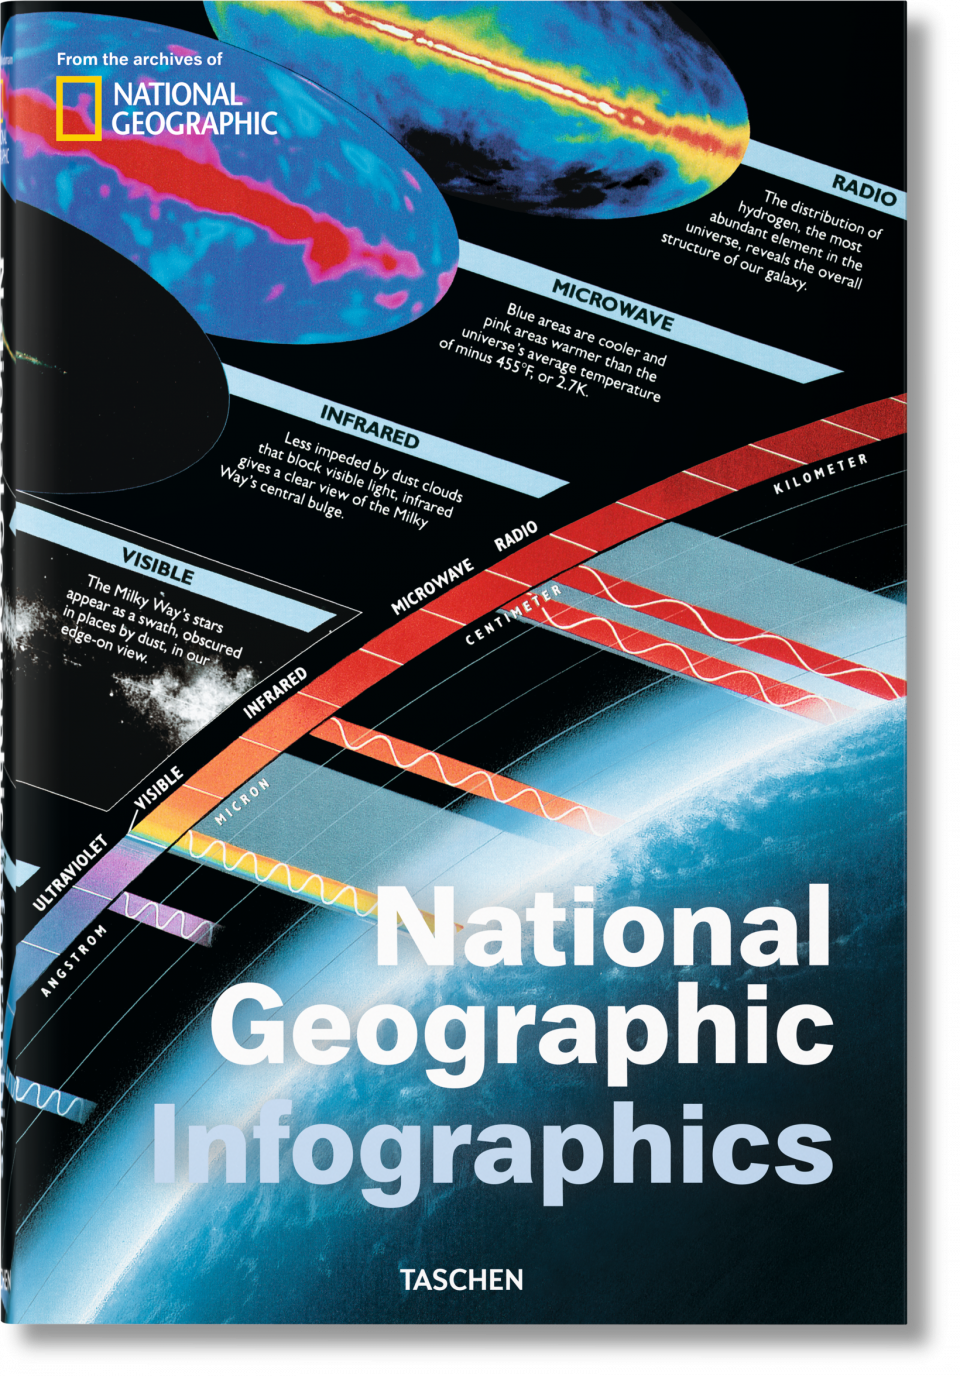 National Geographic labākās infografikas